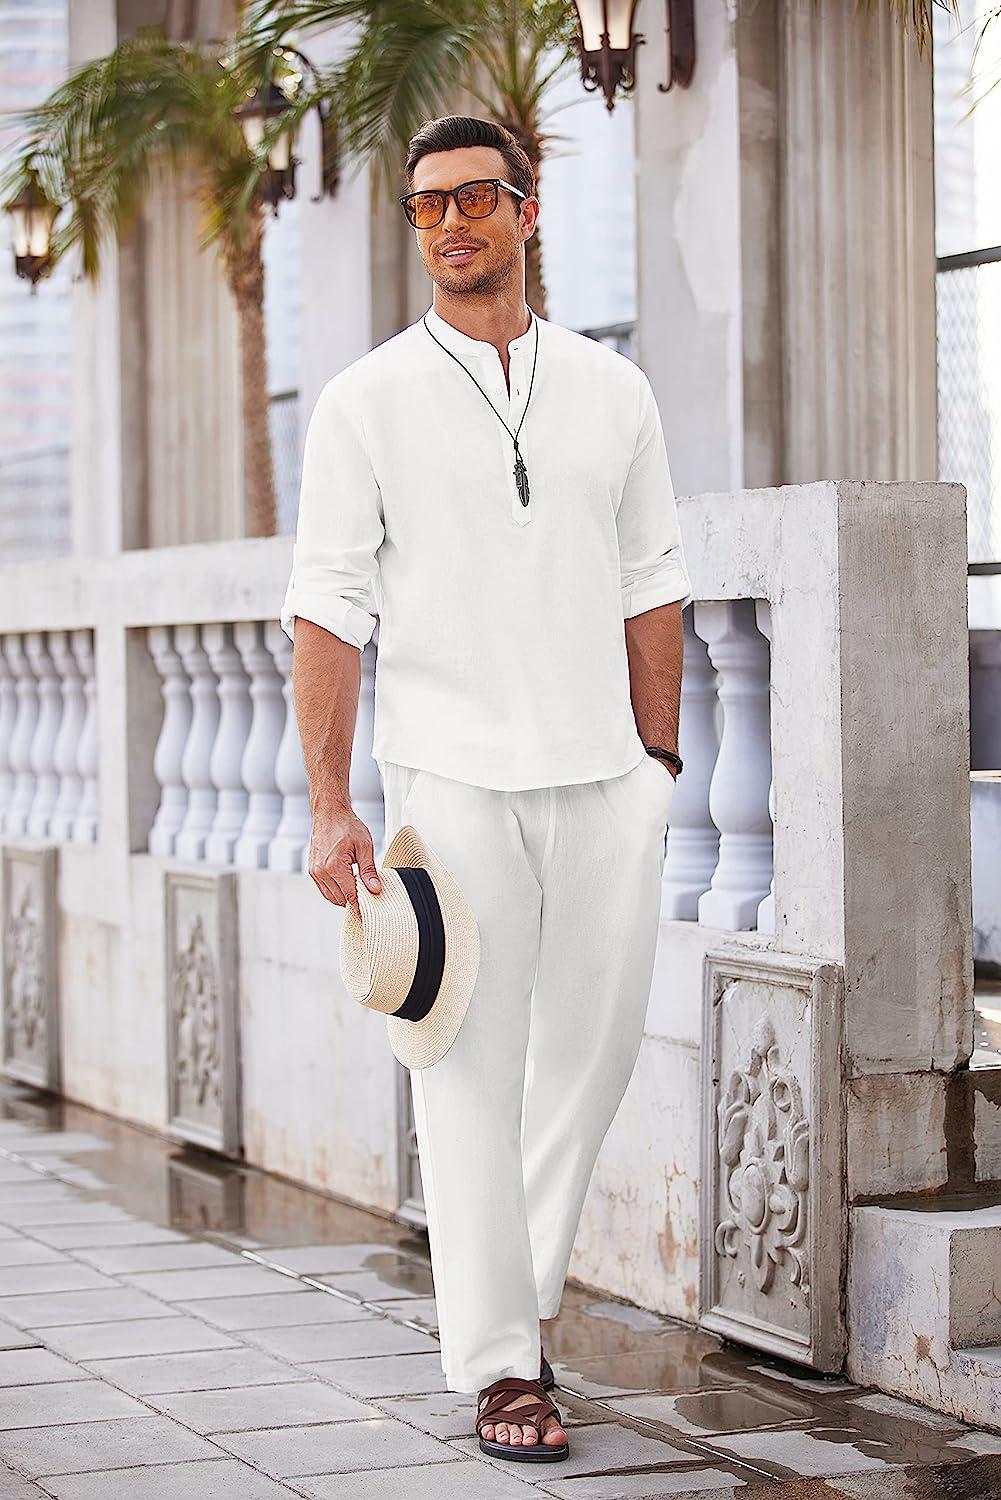 Mens Linen Sets & Cotton Linen Sets & Linen Shirt Sets – COOFANDY